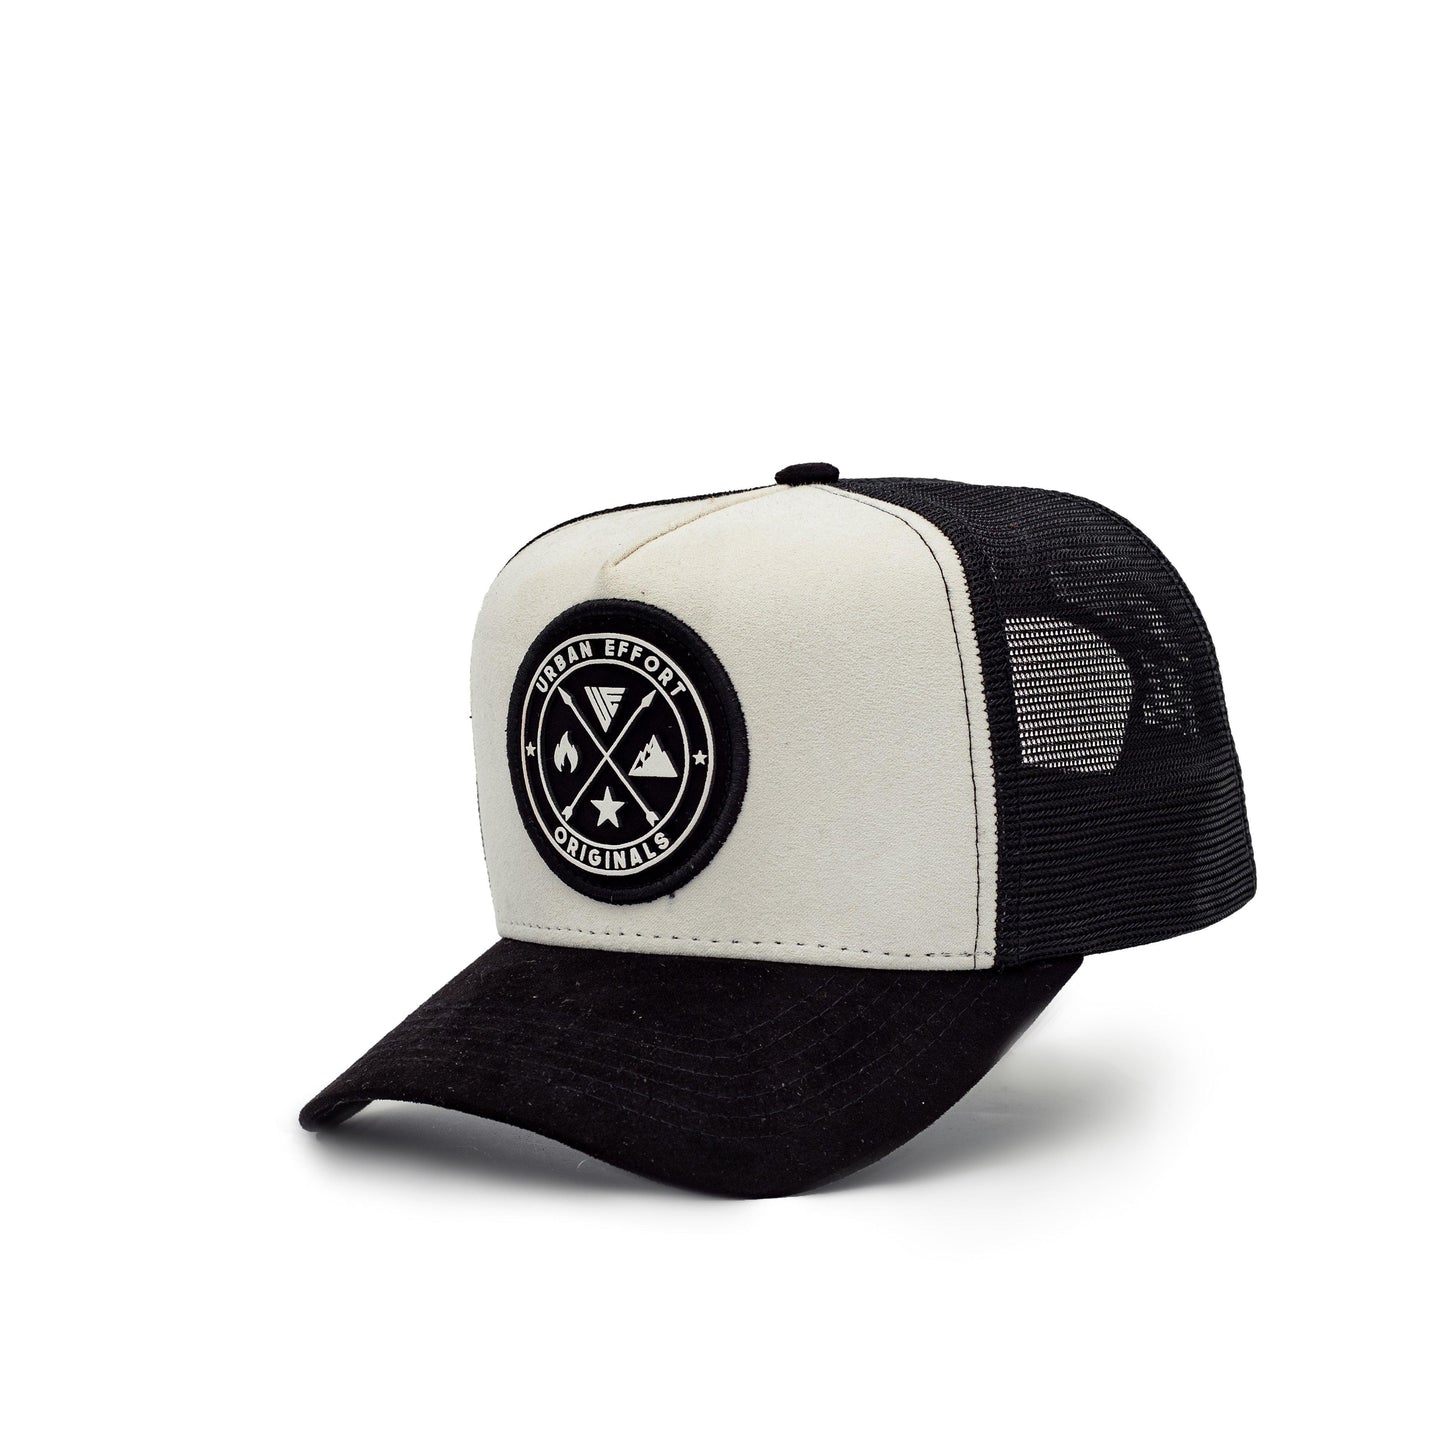 White Urban Hat & Classic | Urban Style | Effort Black Trucker